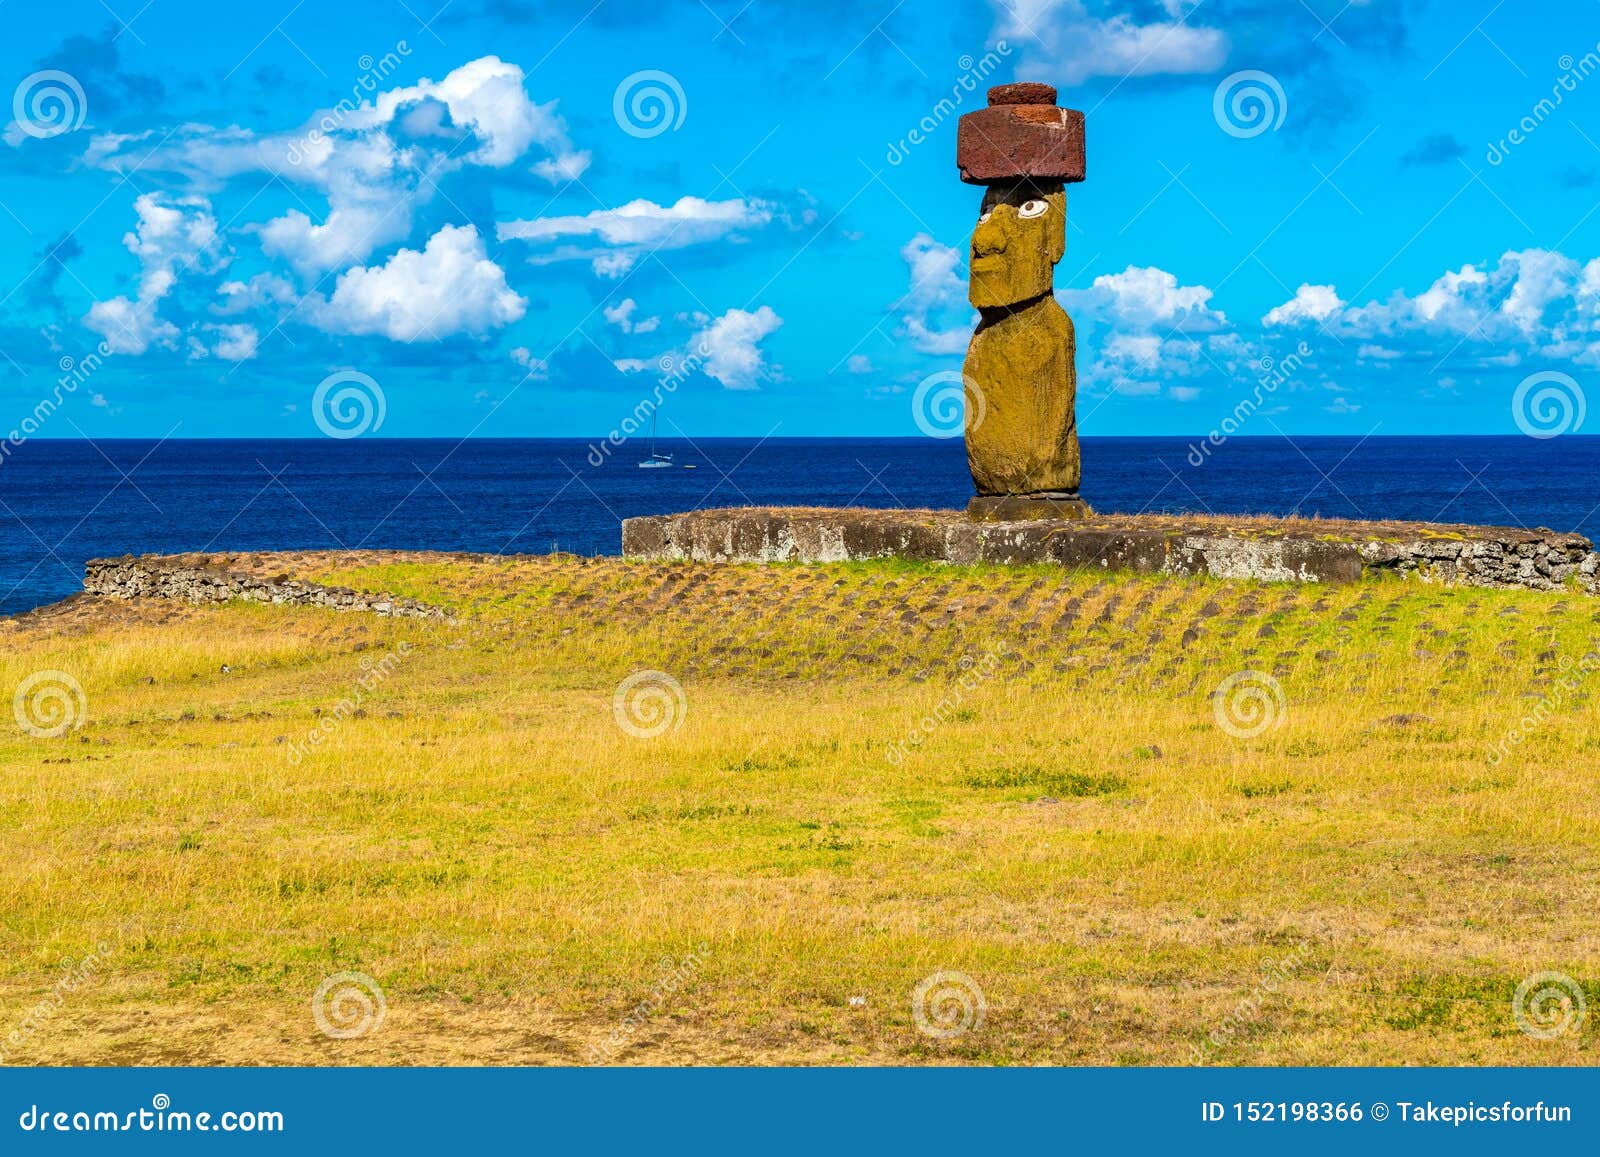 moai with red pukao or red hat at ahu ko te riku on easter island